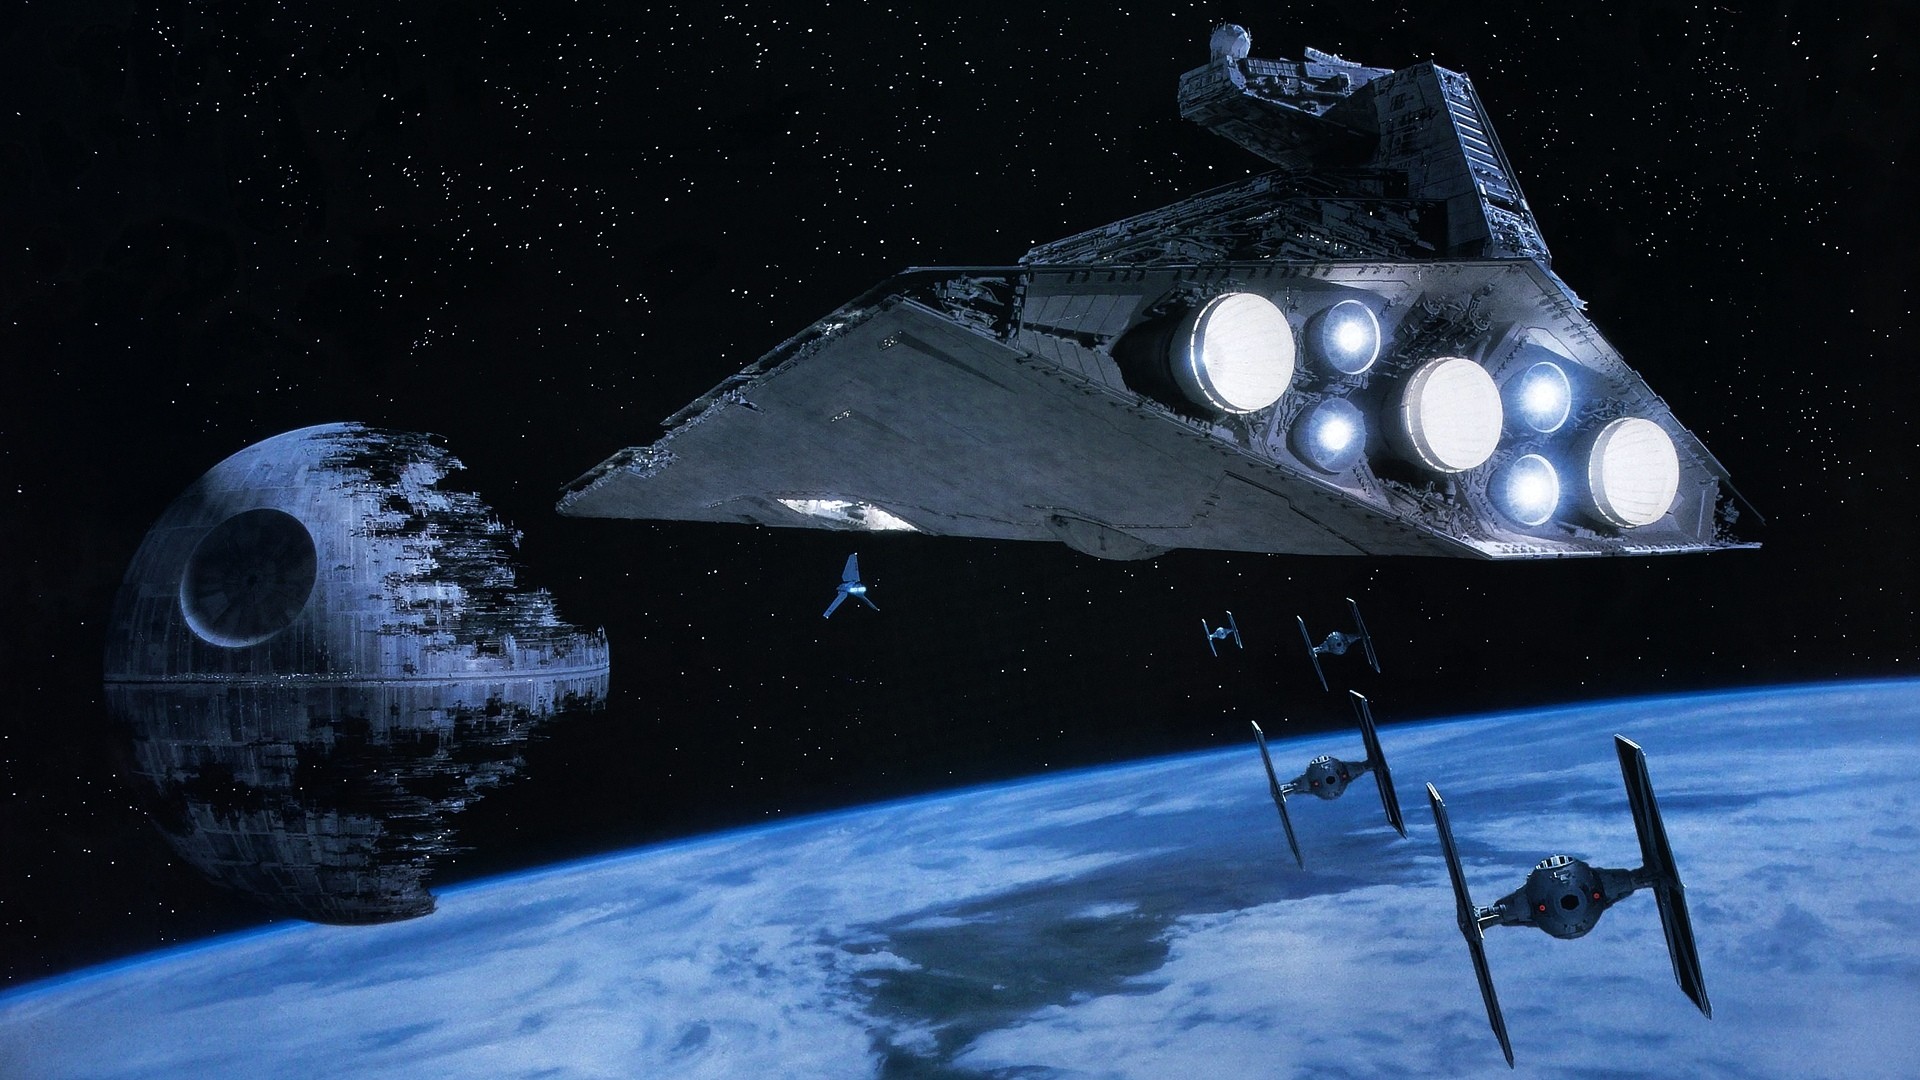 General 1920x1080 Star Wars Star Destroyer TIE Fighter Death Star Star Wars Ships Imperial Forces Star Wars: Return of the Jedi movies film stills Endor science fiction